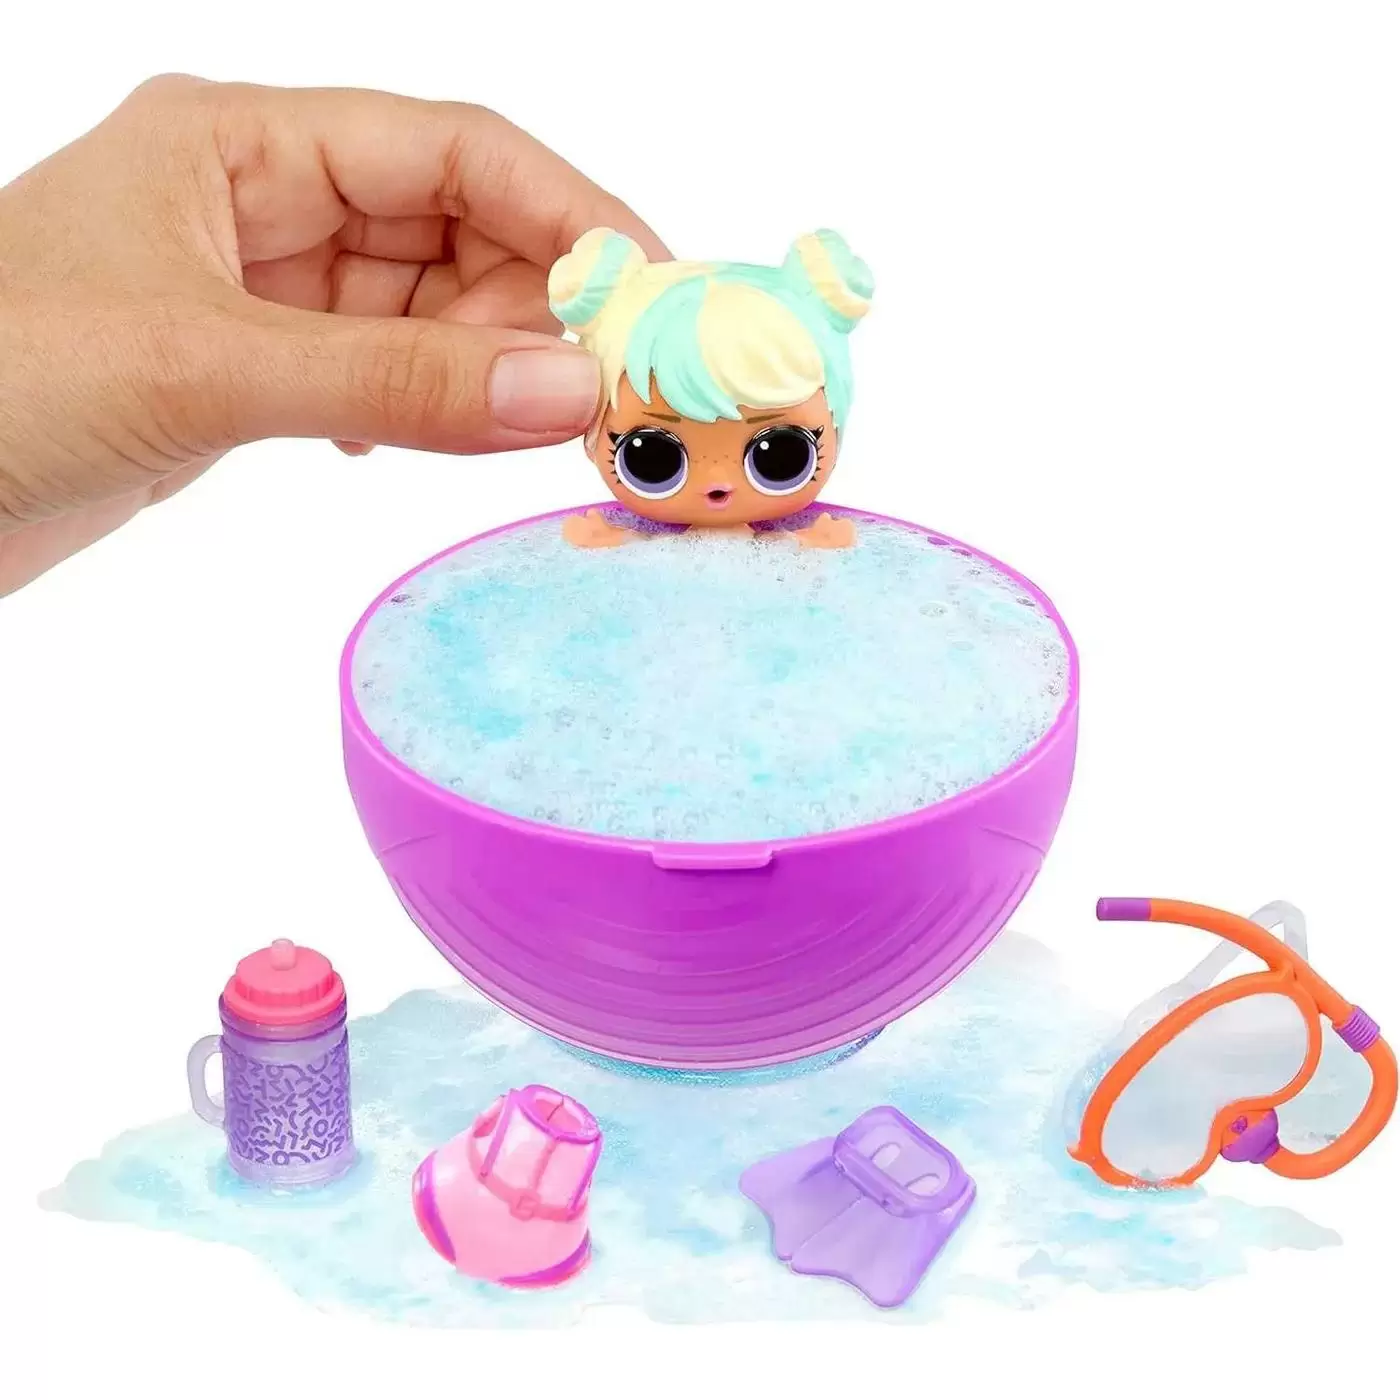 Кукла LOL Bubble Surprise в шаре